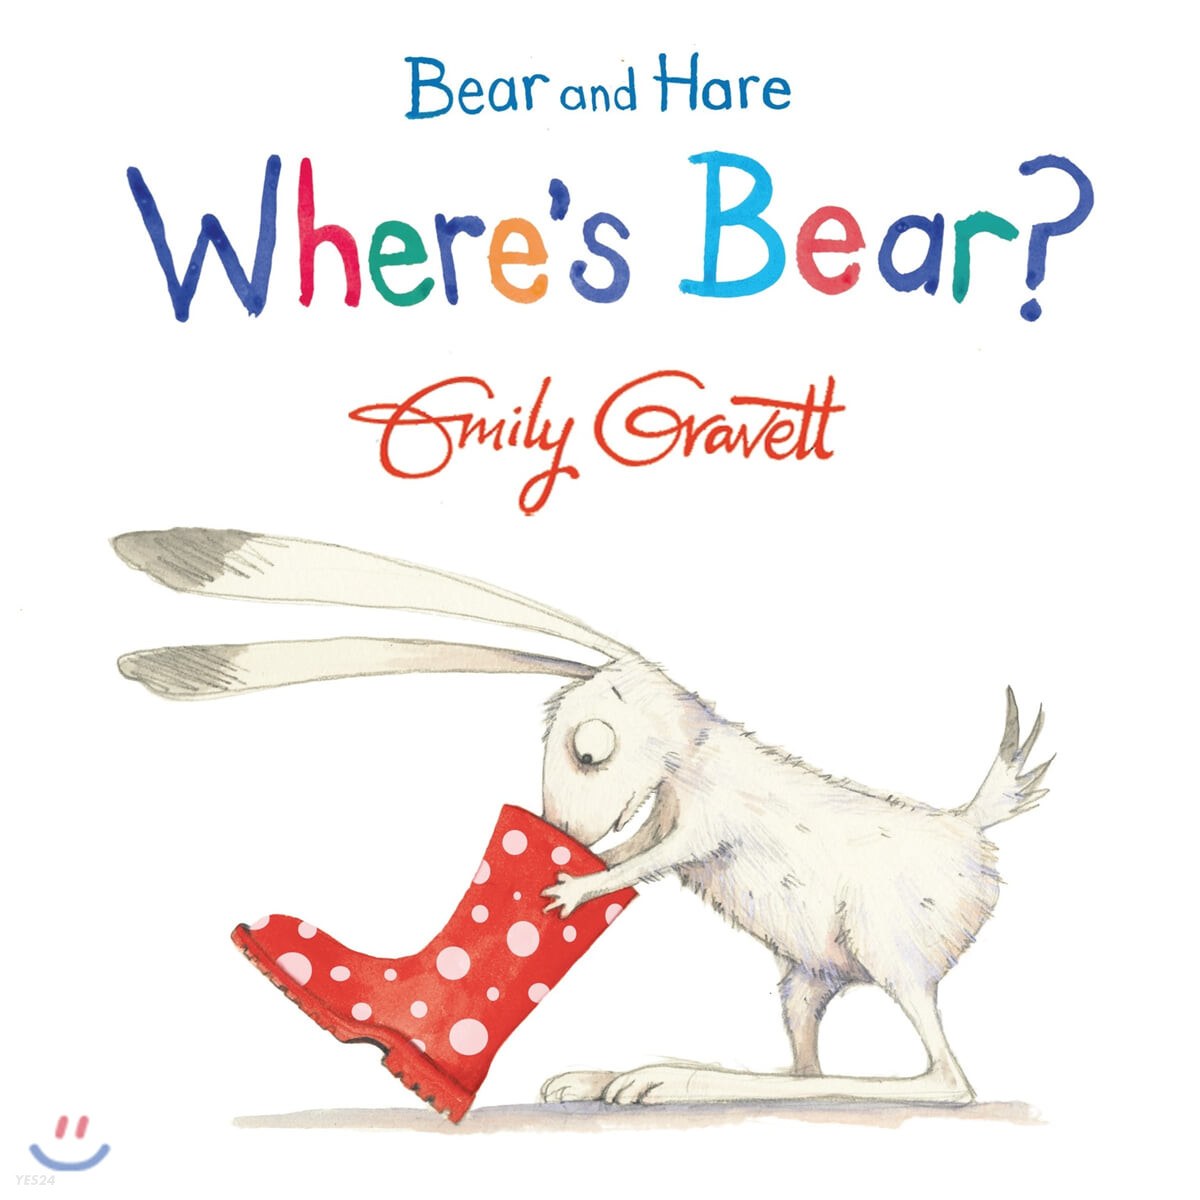 Bear and Hare. [2], where's bear?